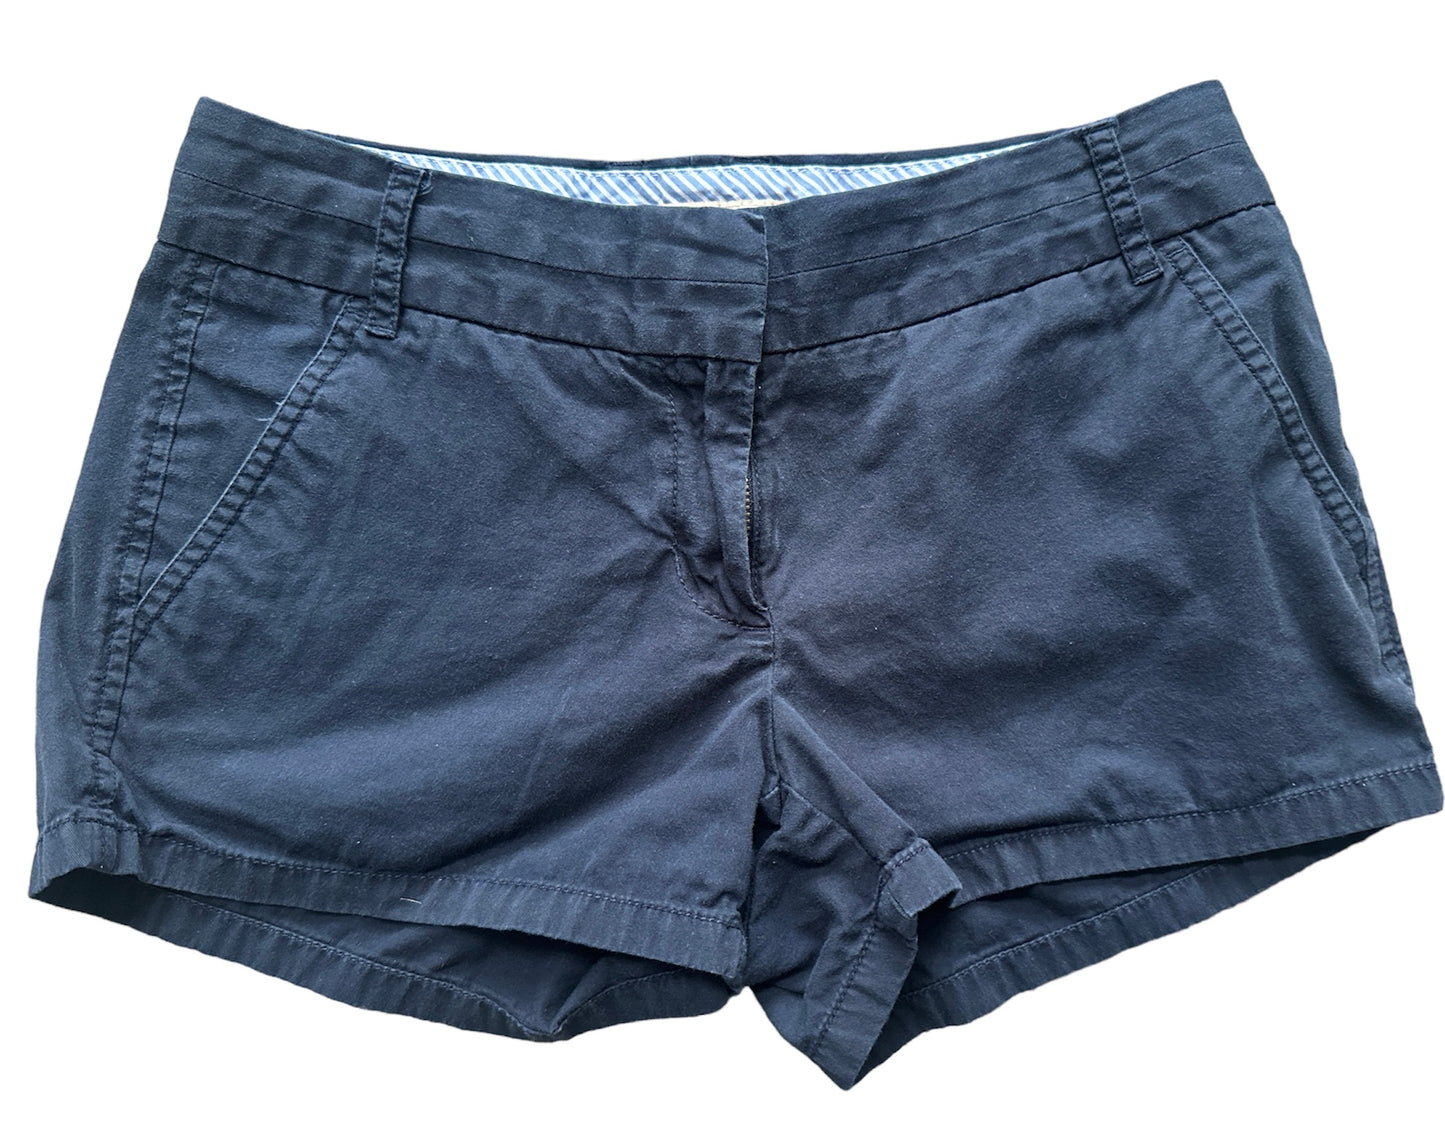 Women’s J. Crew shorts size 0